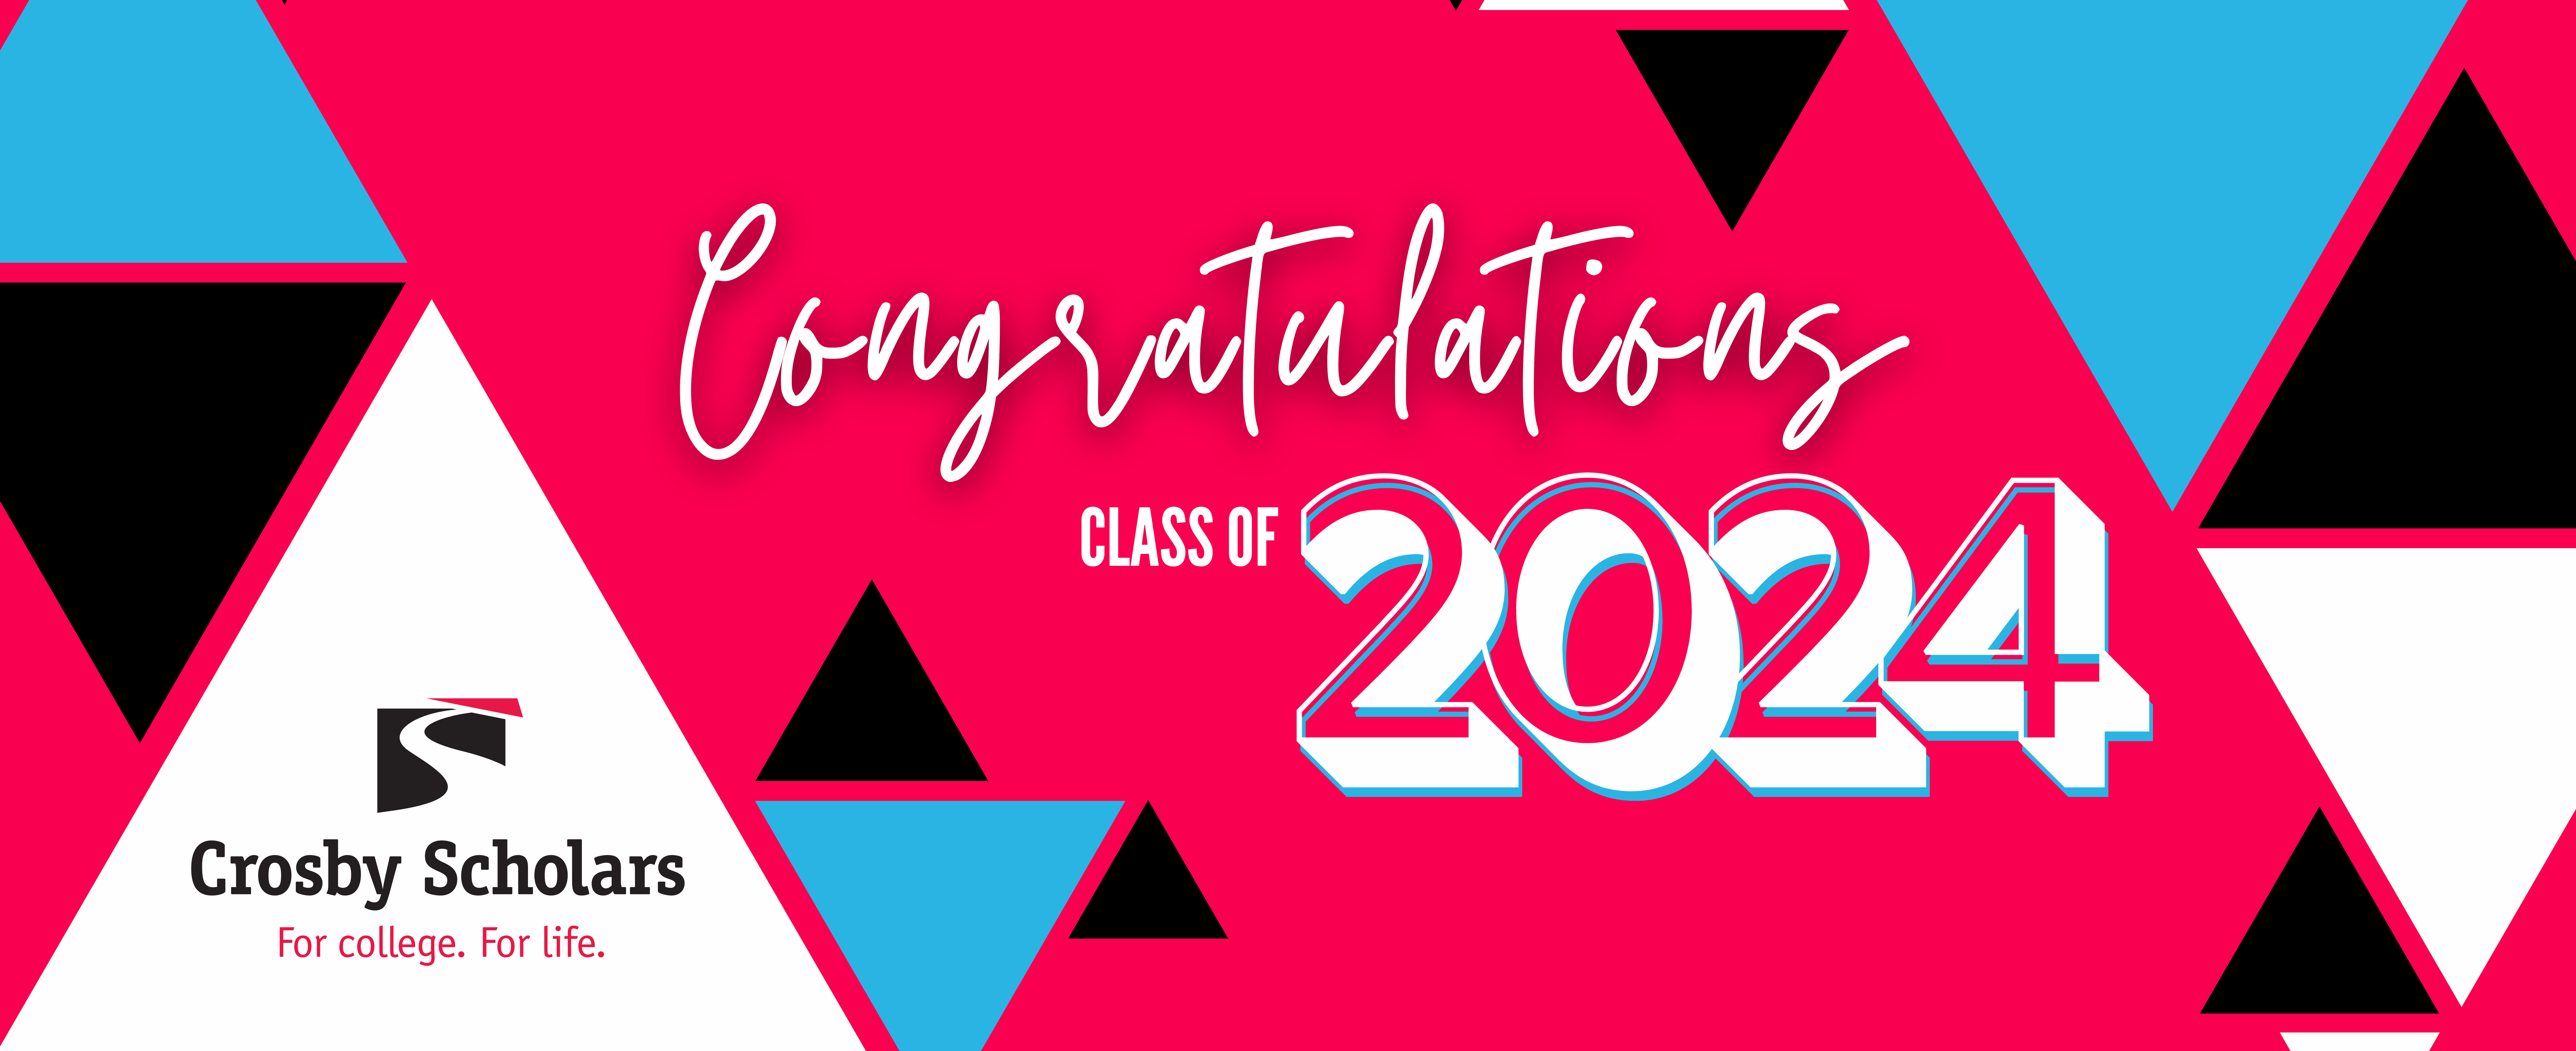 Congratulations Crosby Scholars Class of 2024!